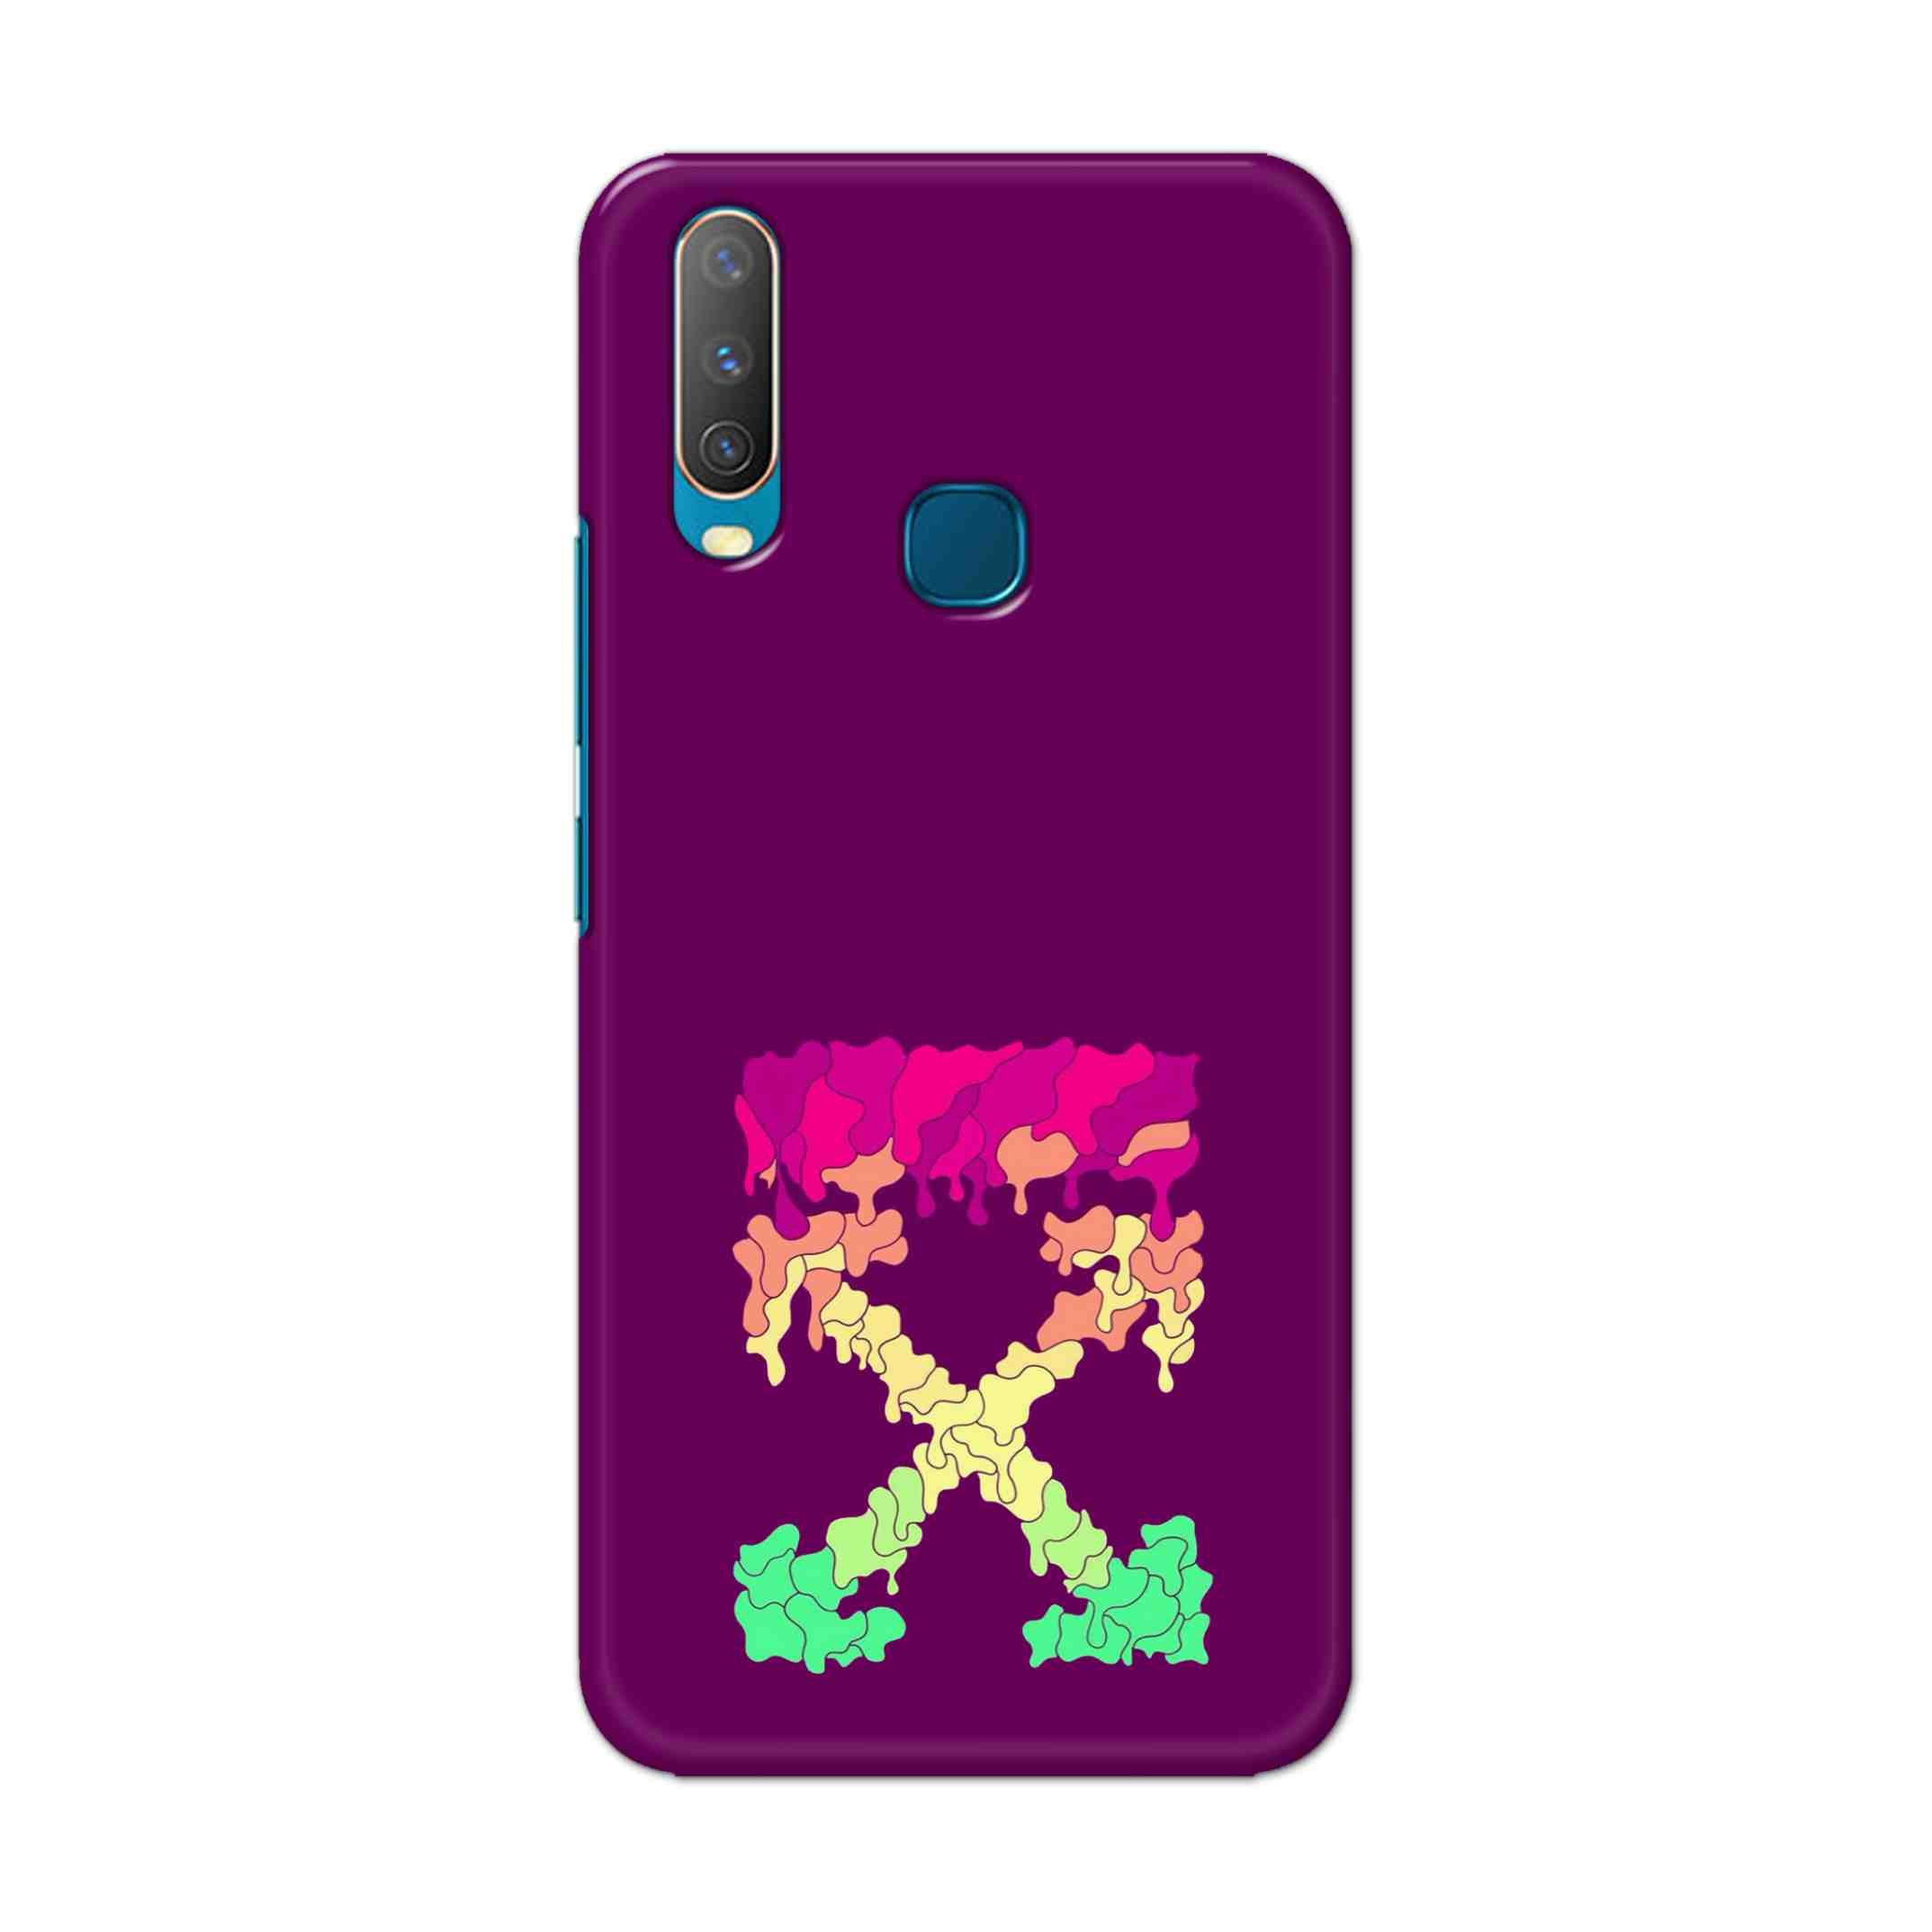 Buy X.O Hard Back Mobile Phone Case Cover For Vivo Y17 / U10 Online